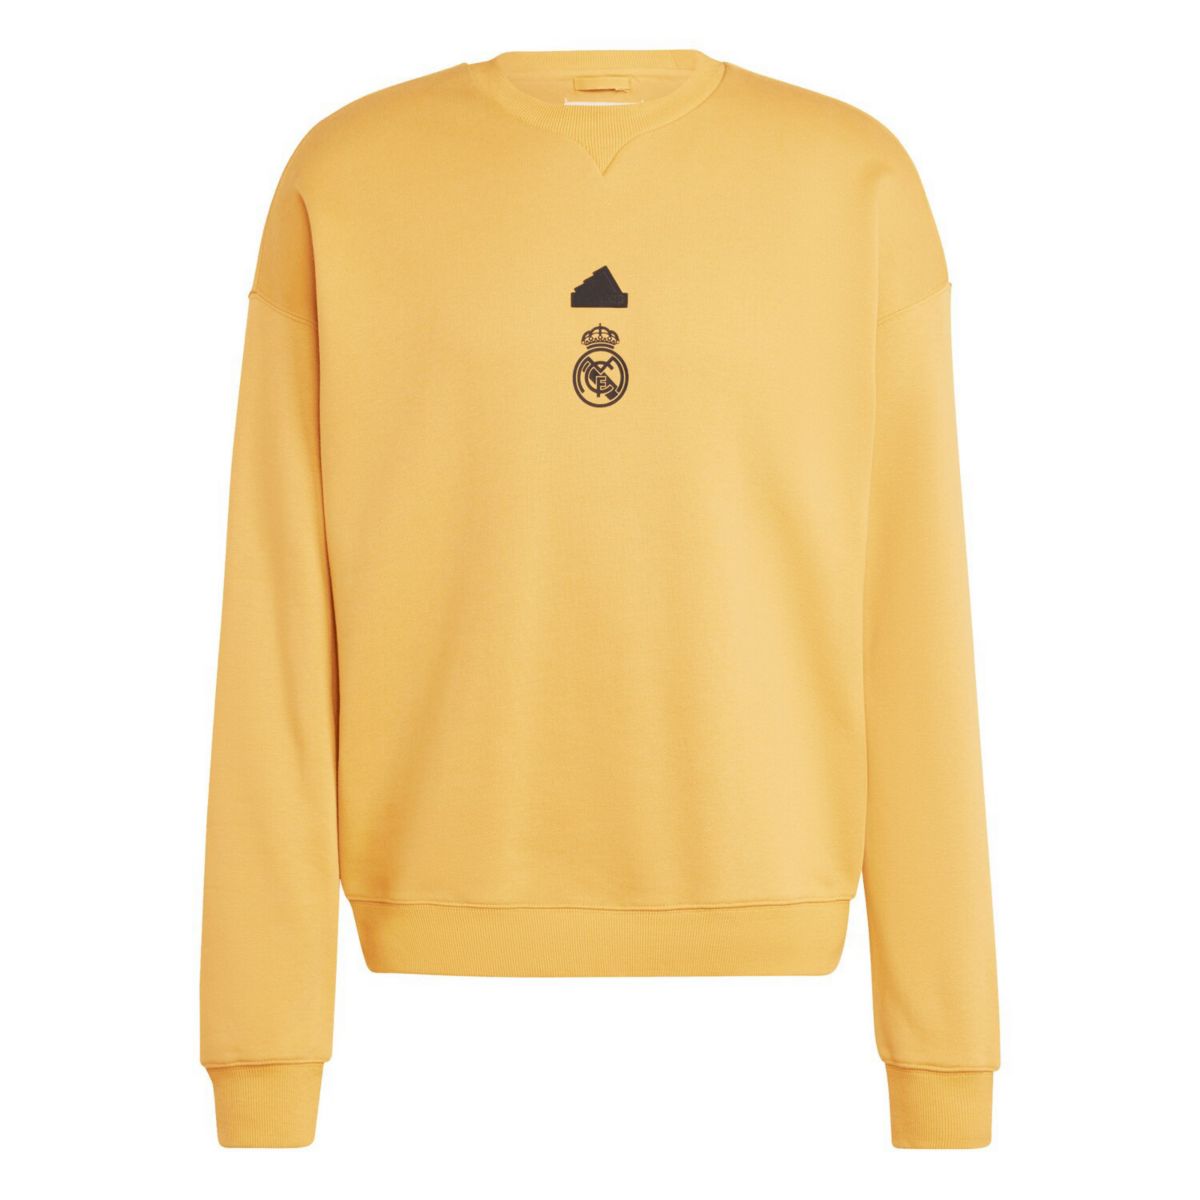 Men's adidas Yellow Real Madrid Lifestyle Crew Sweatshirt Adidas